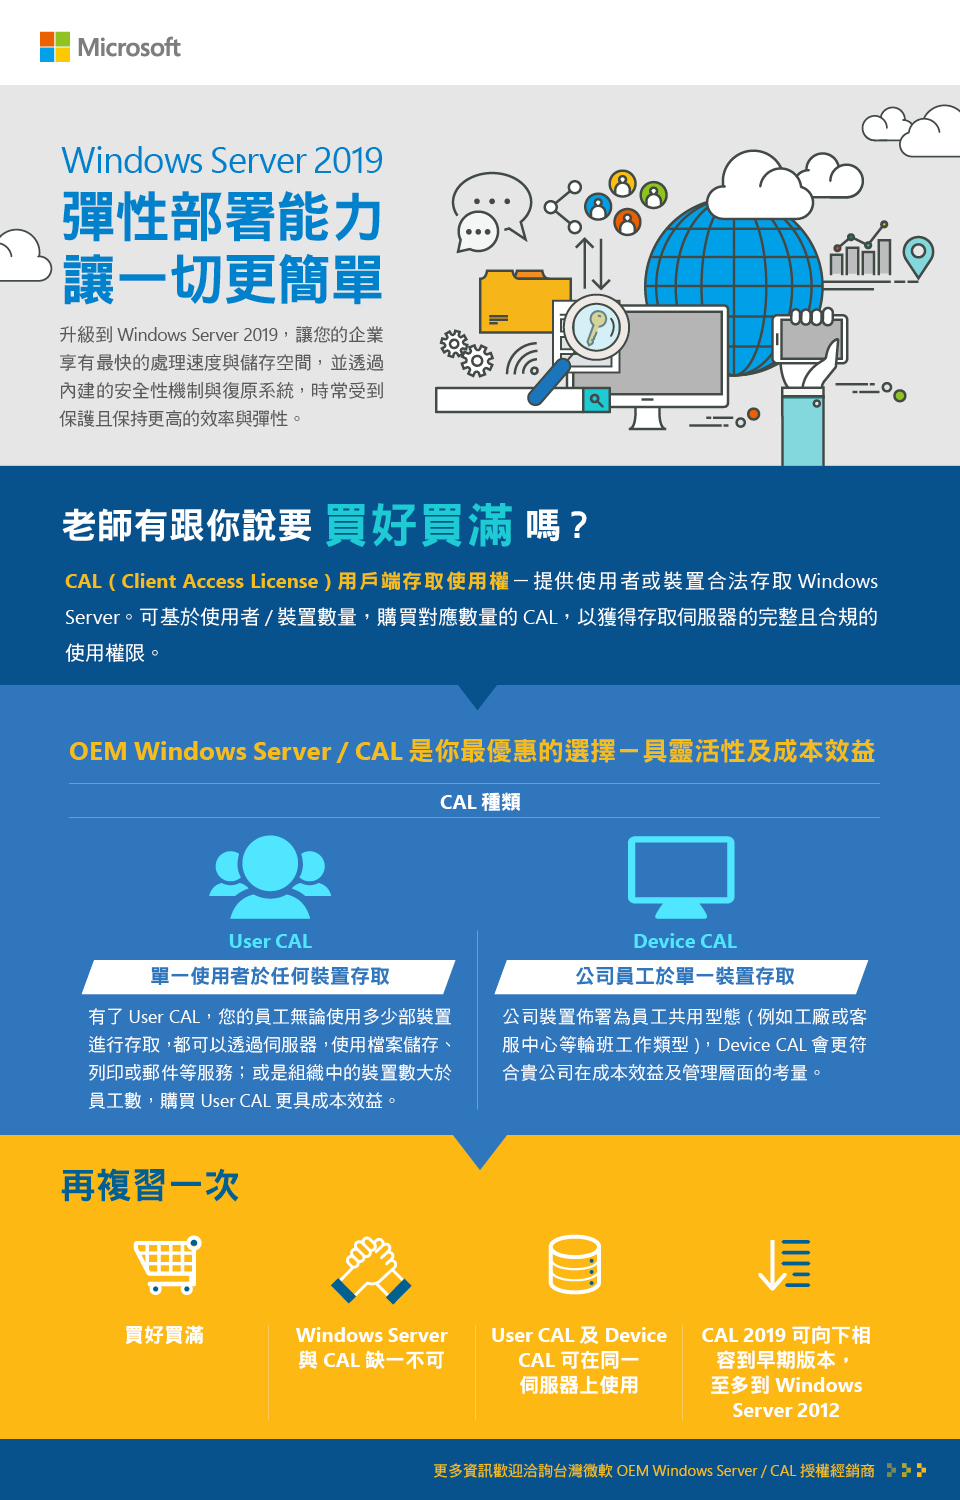 Windows Server 2019 - OEM Windows Server / CAL